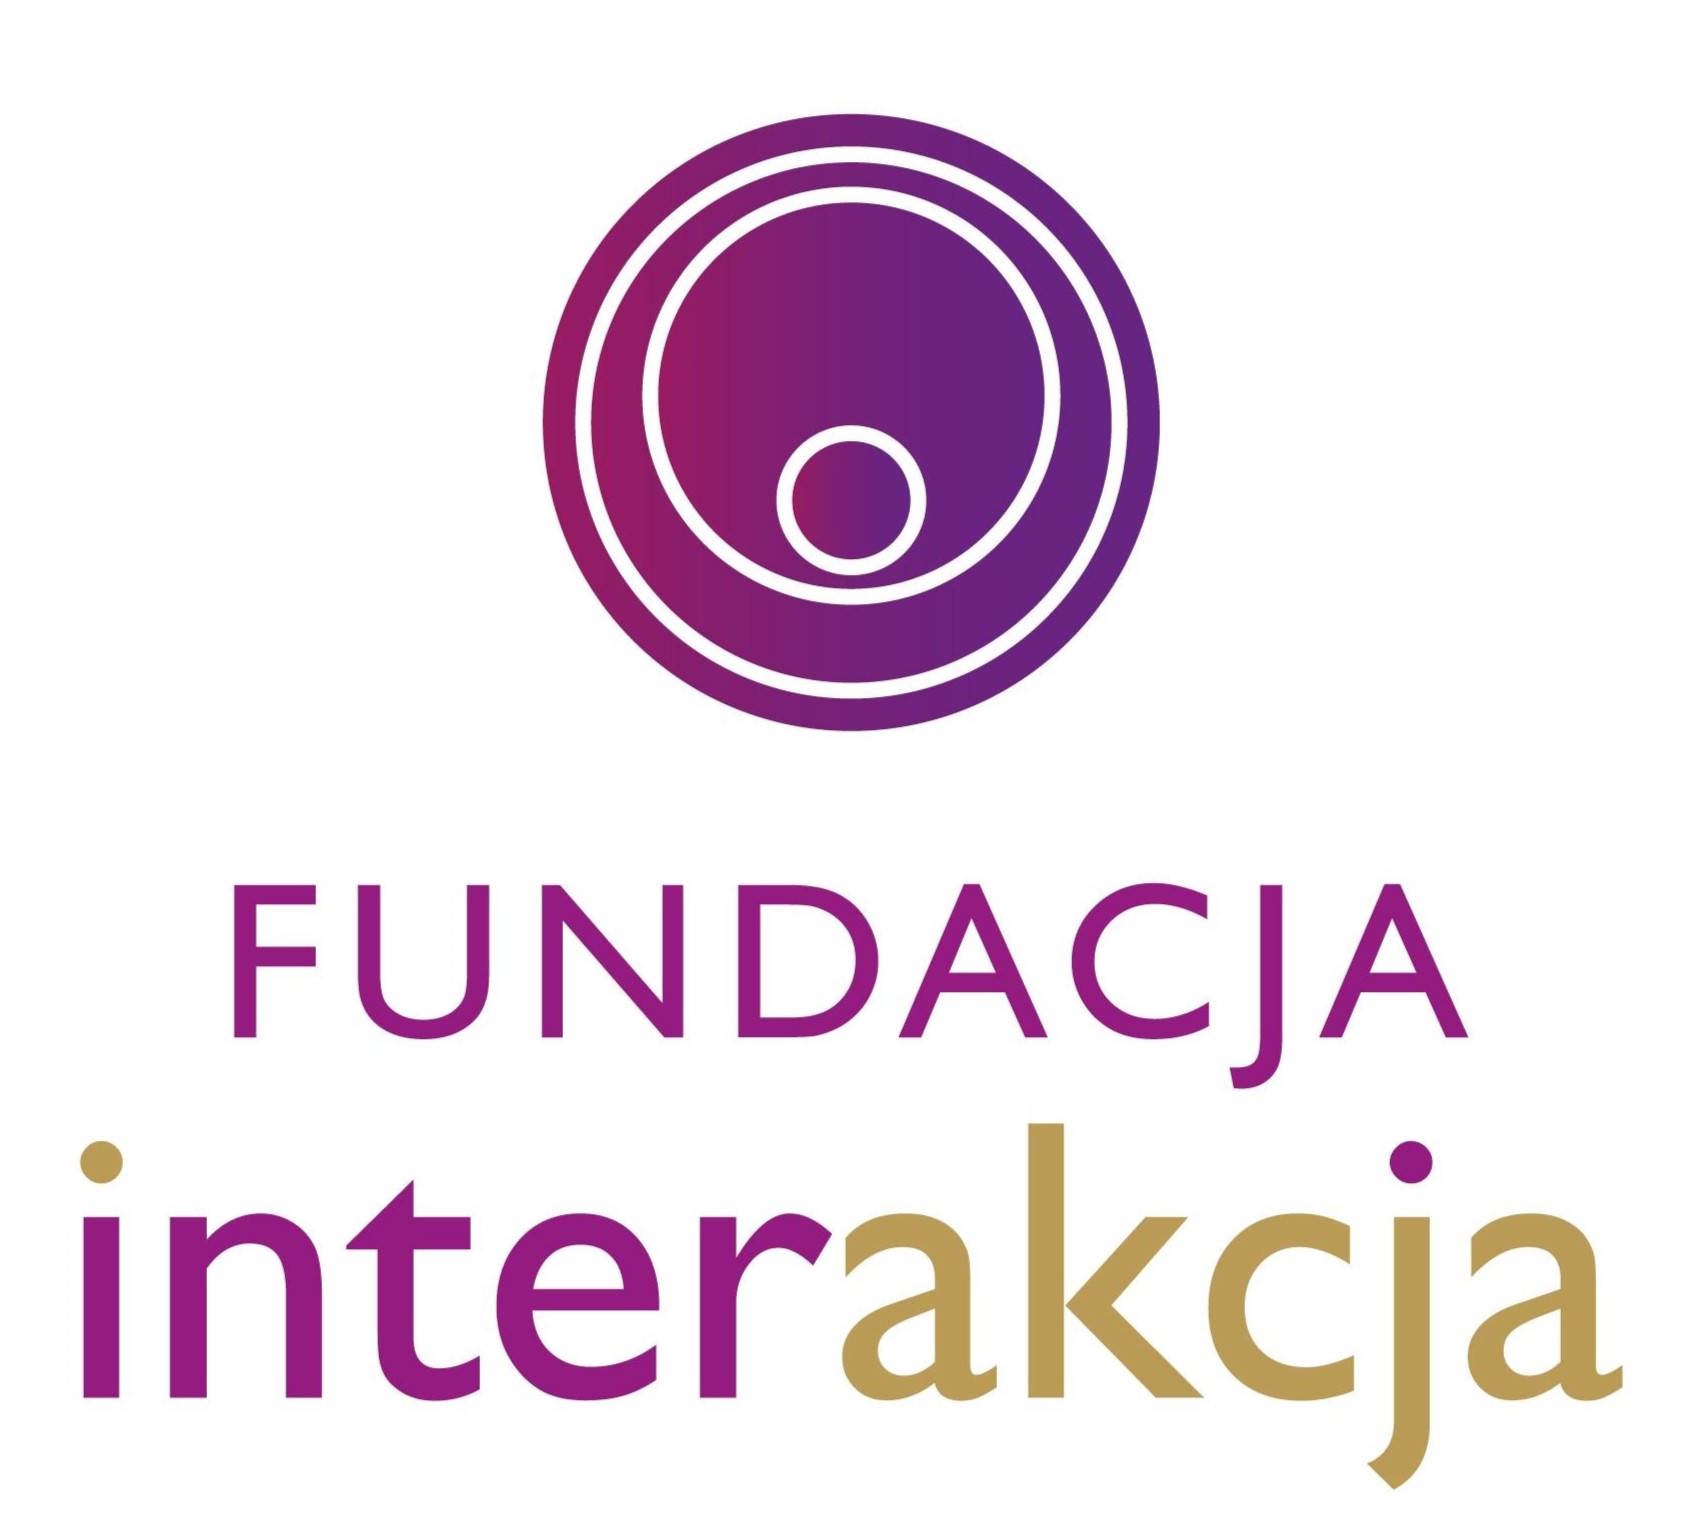 Fundacja Interakcja wordmark logo